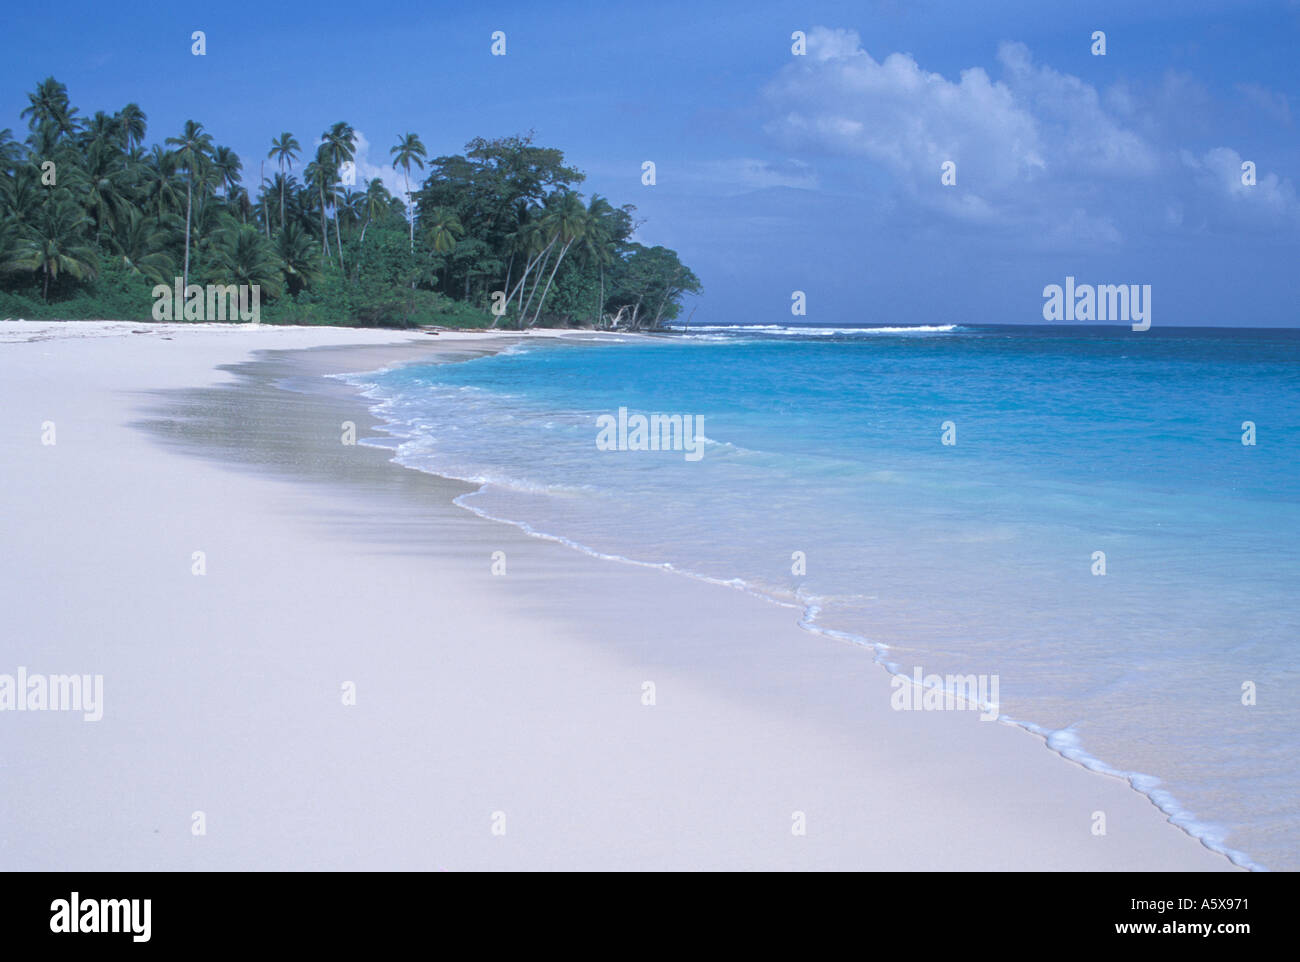 Indonesia Mentawai Islands empty beach Stock Photo - Alamy